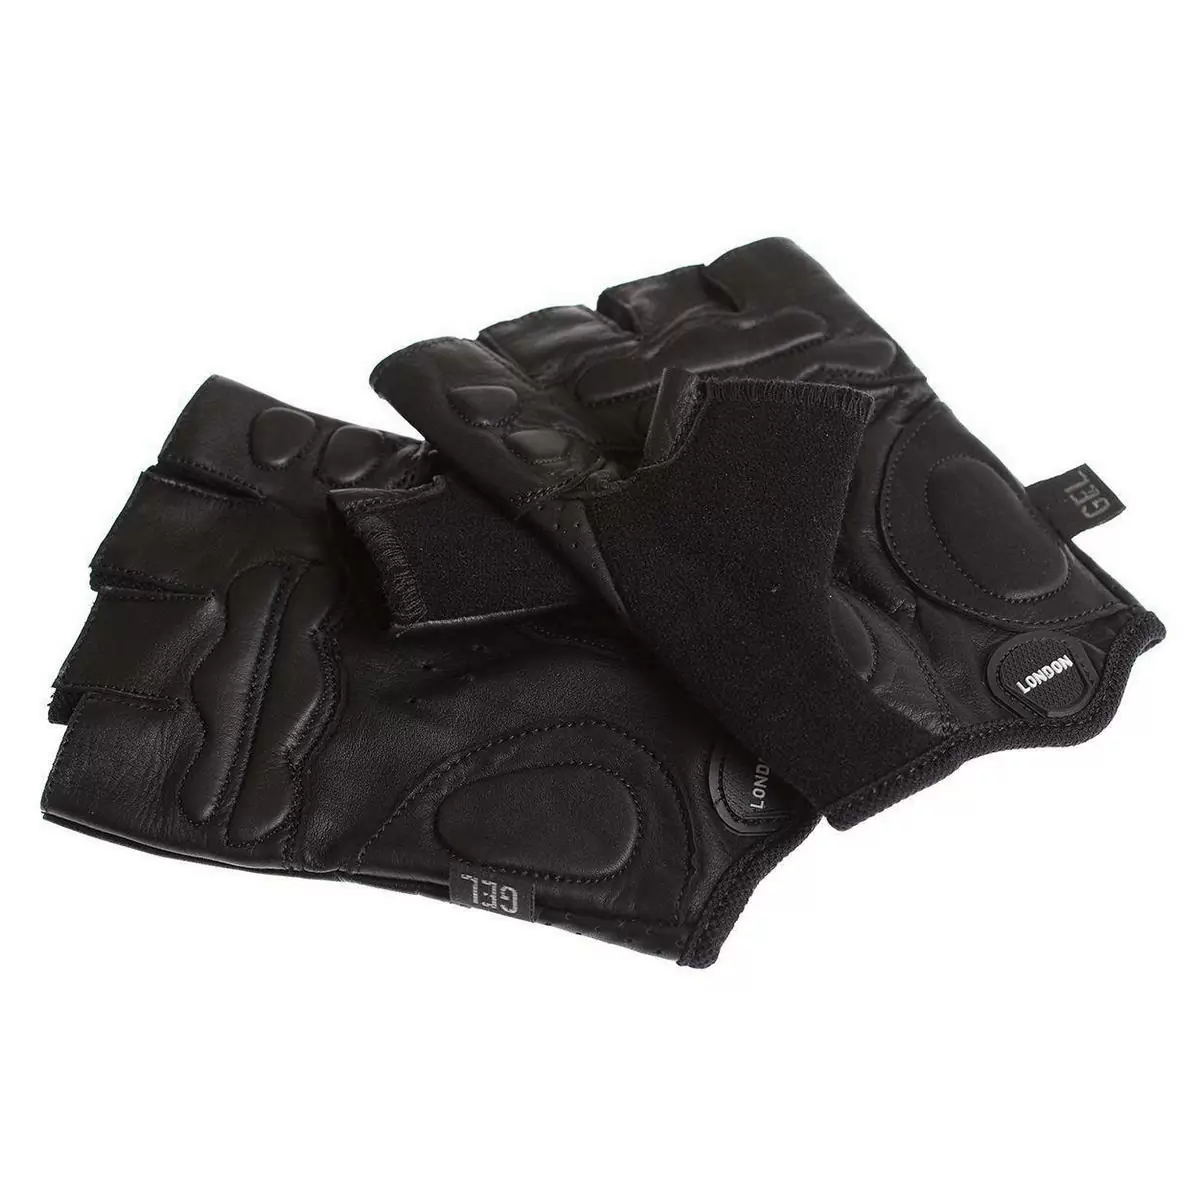 leather gloves classic sport size xxl black #2